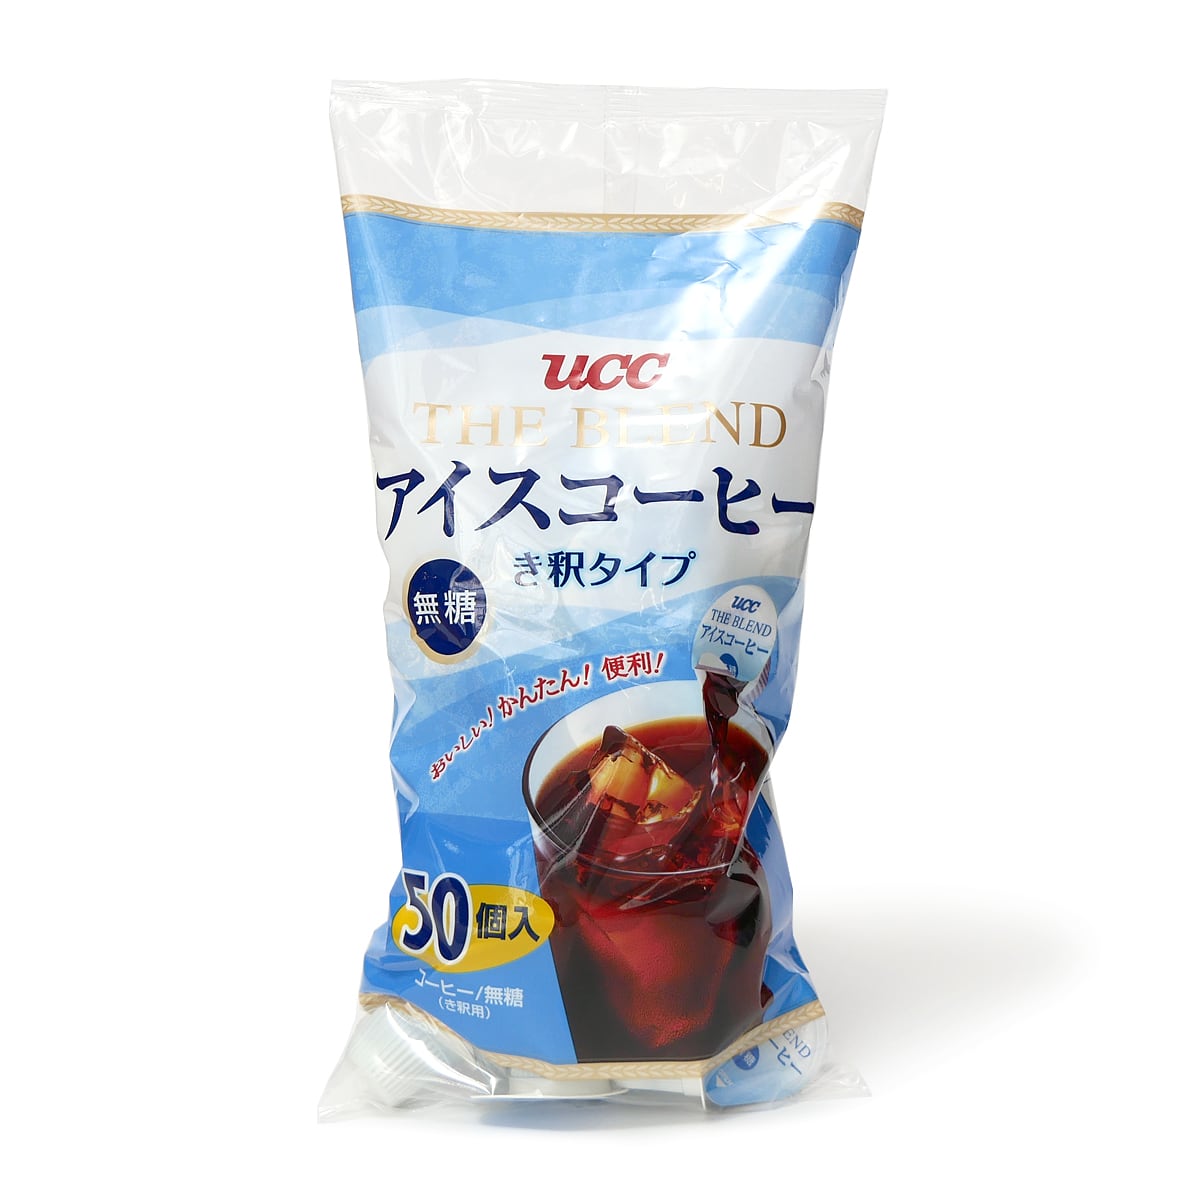 UCC アイスコーヒー希釈タイプ 無糖 50個入 | コストコ通 コストコ ...